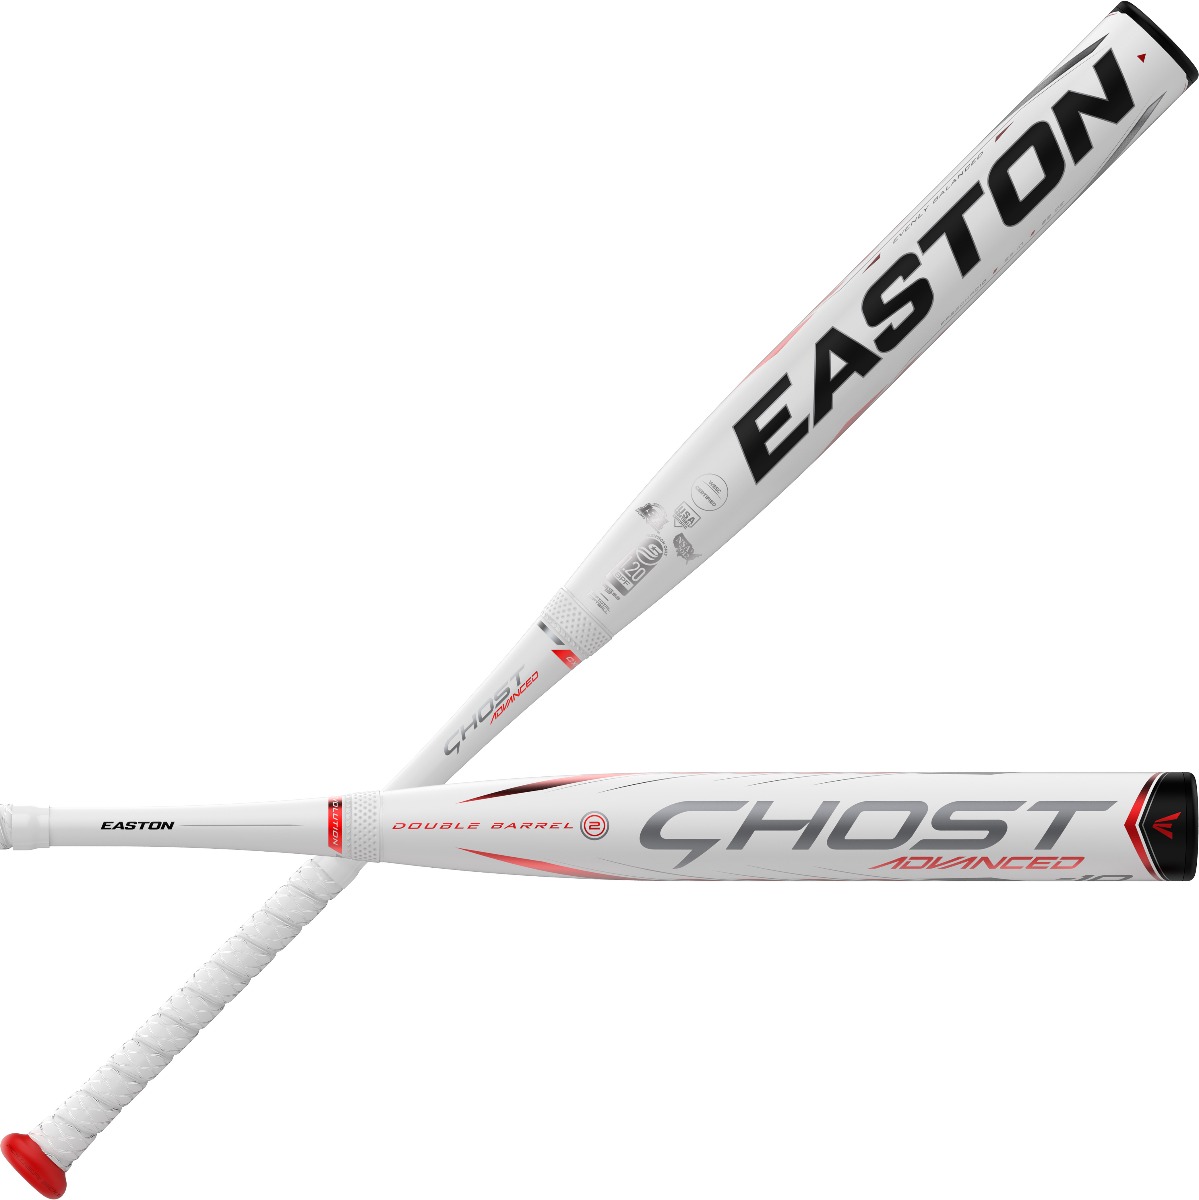 Easton Ghost Advanced 10 Fastpitch Softball Bat FP22GHAD10